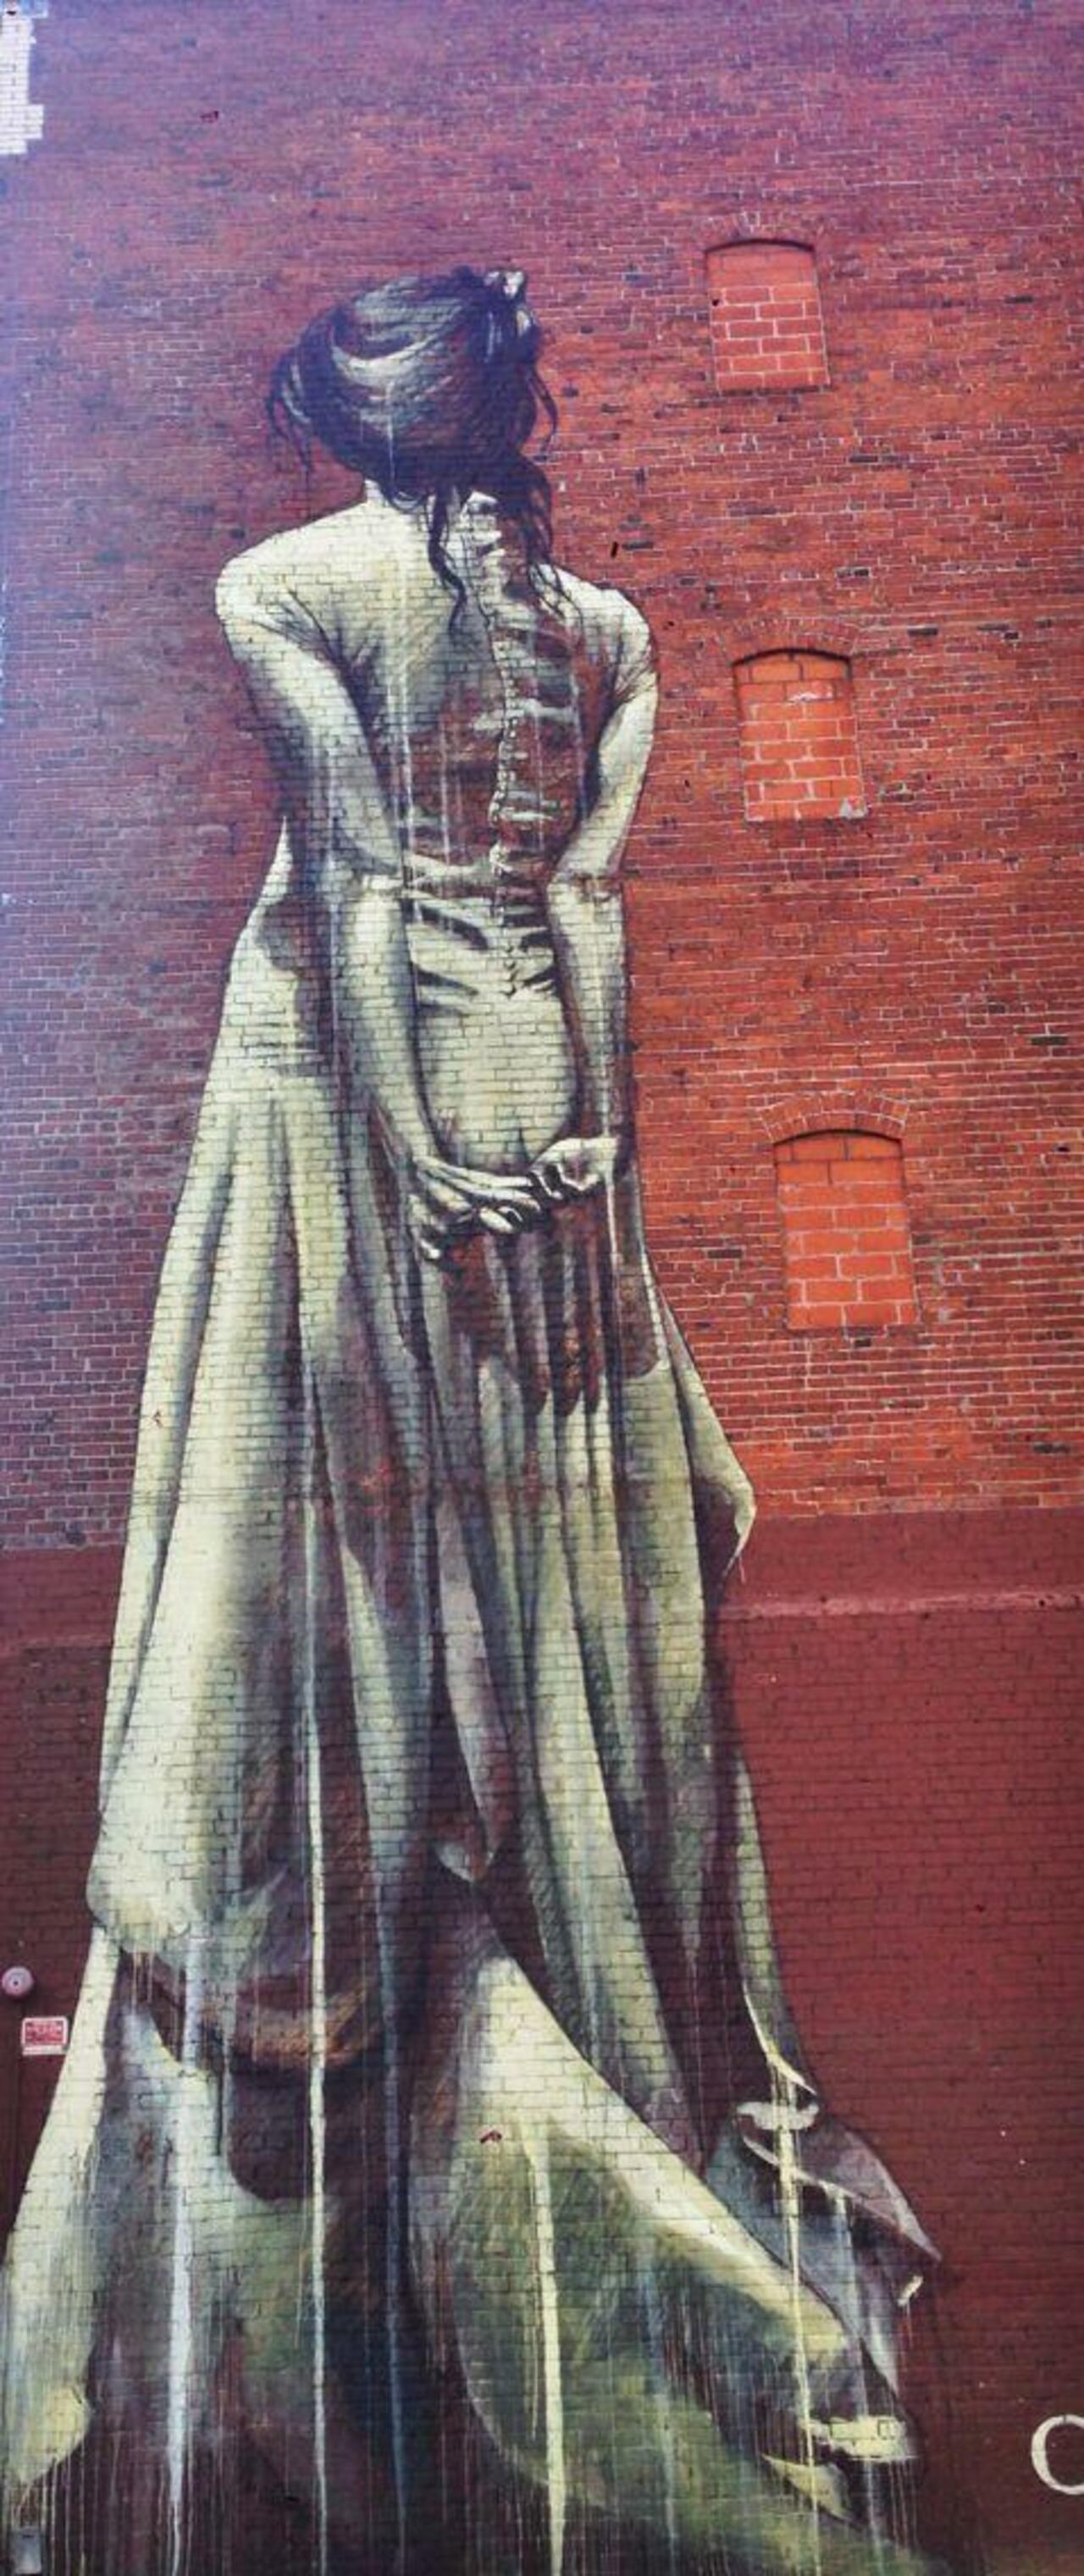 RT @5putnik1: Her Gigantic Grace #streetart #graffiti #art #funky #dope . : http://t.co/DxgubclLwq